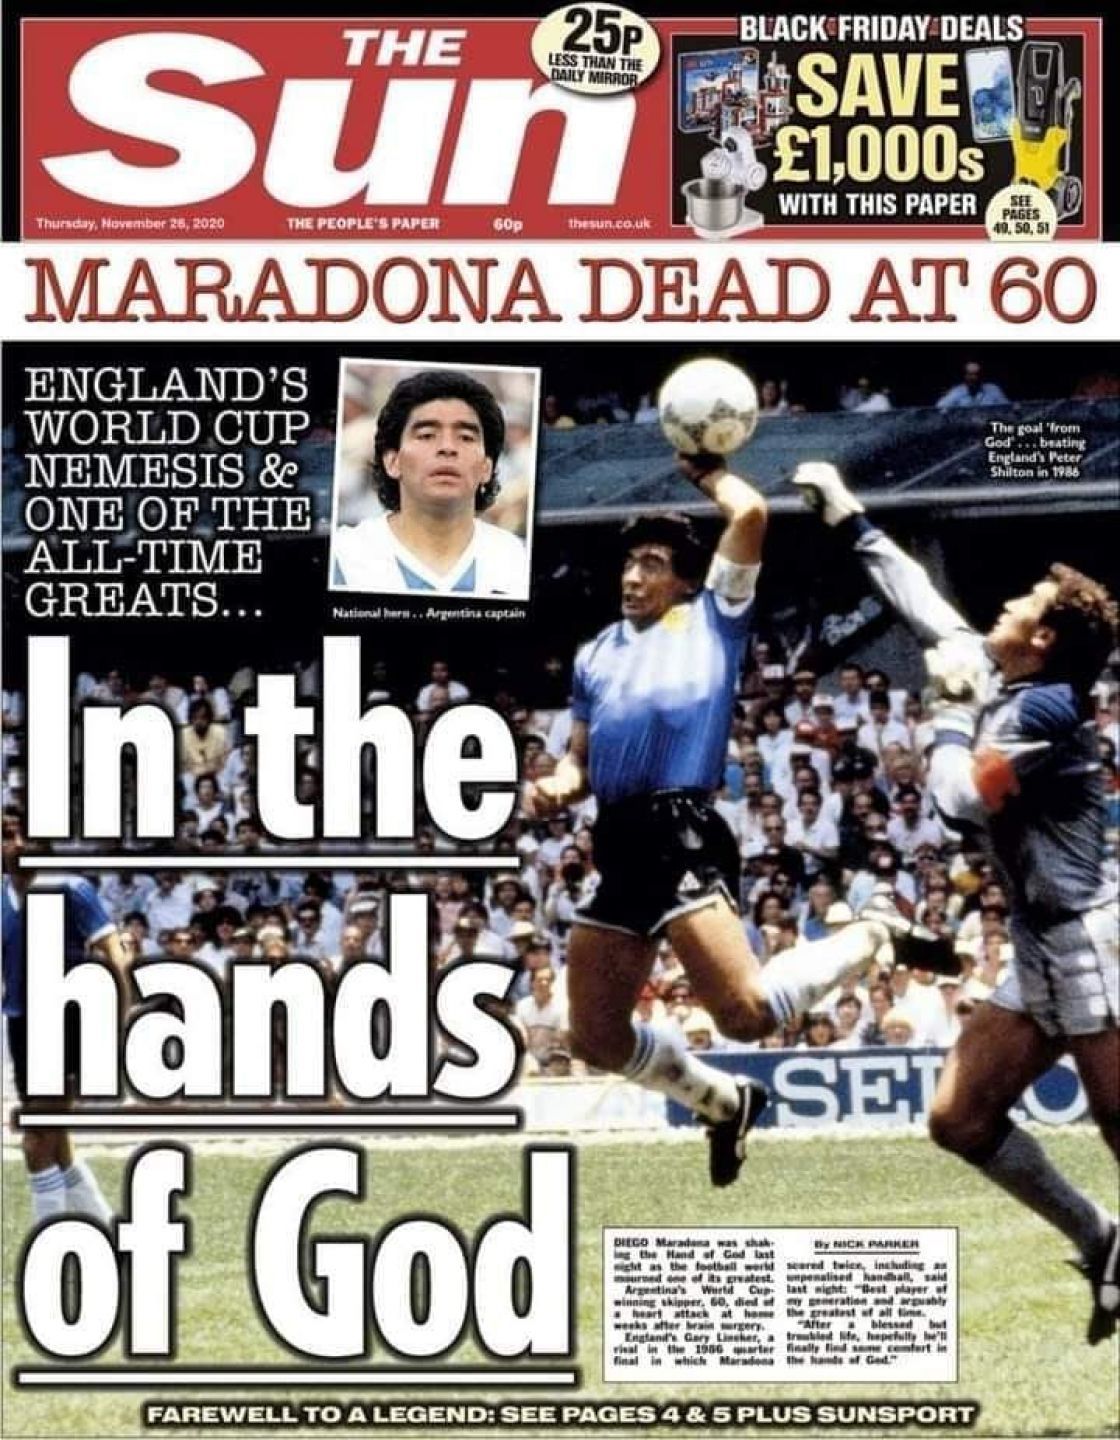 Even in his death, Maradona hurts “Great” Britain